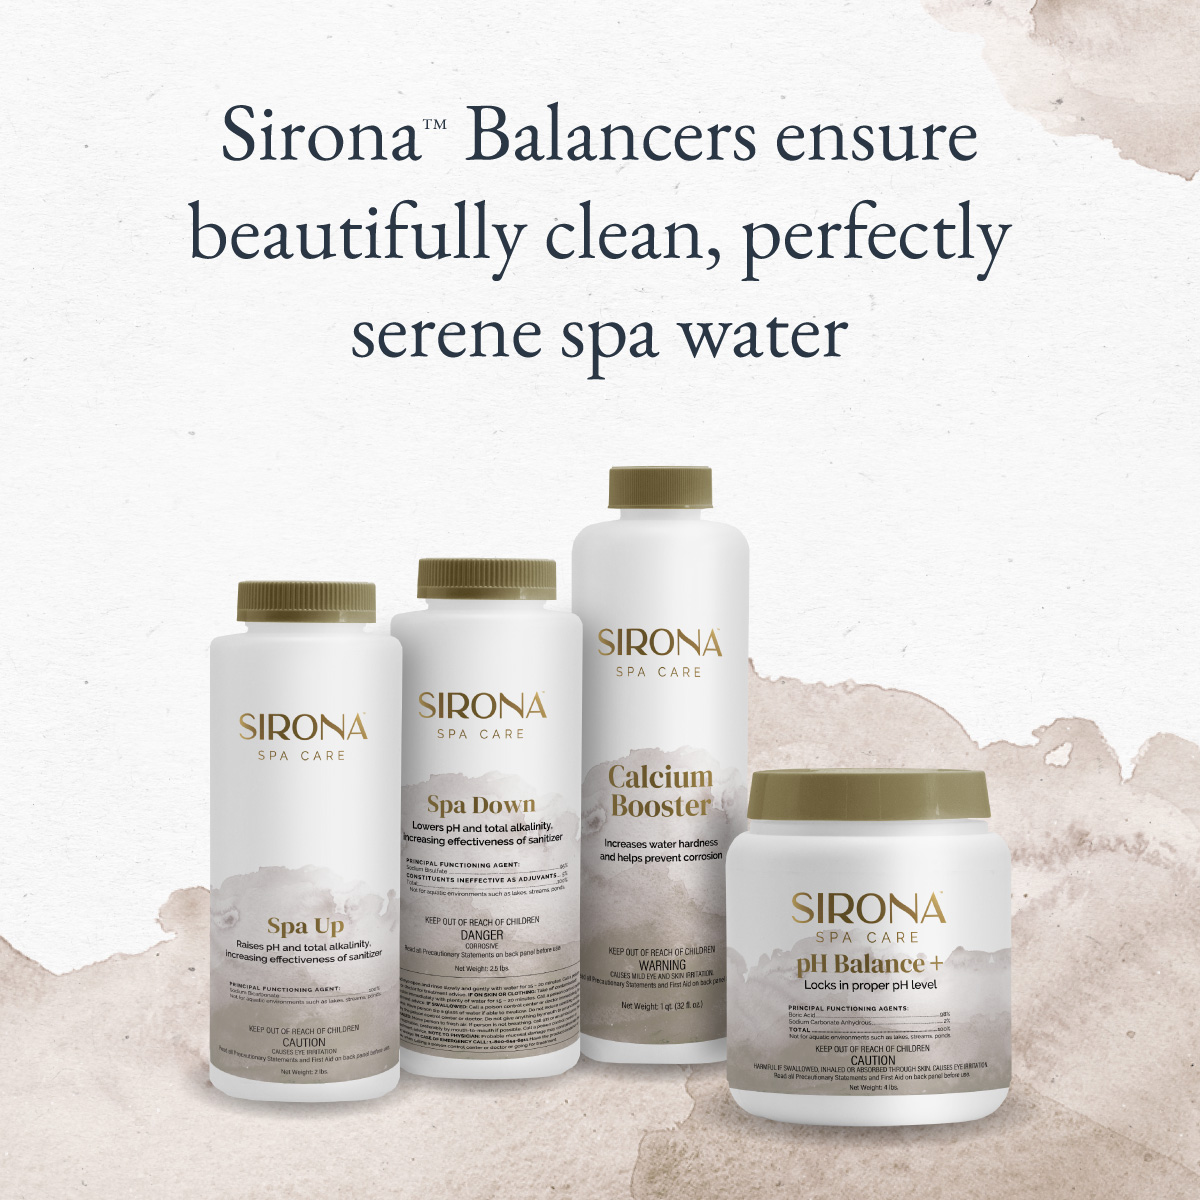 Sirona™ Balancers ensure beautifully clean, perfectly serene spa water